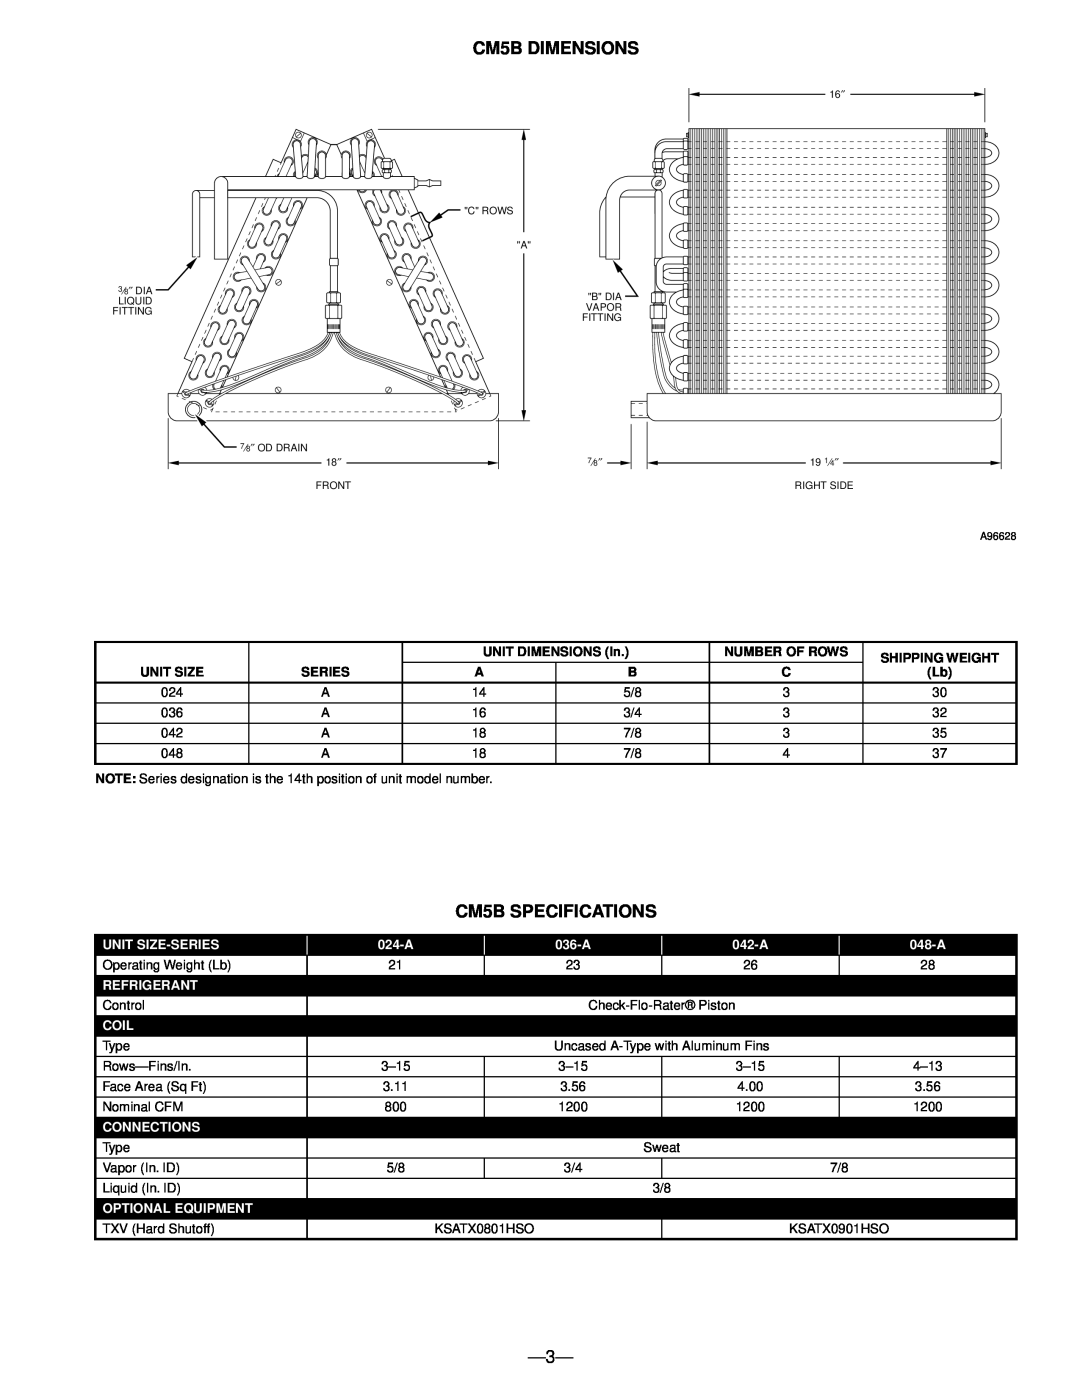 Bryant CM5A manual CM5B DIMENSIONS, CM5B SPECIFICATIONS, Unit Size-Series, 024-A, 036-A, 042-A, 048-A, Refrigerant, Coil 